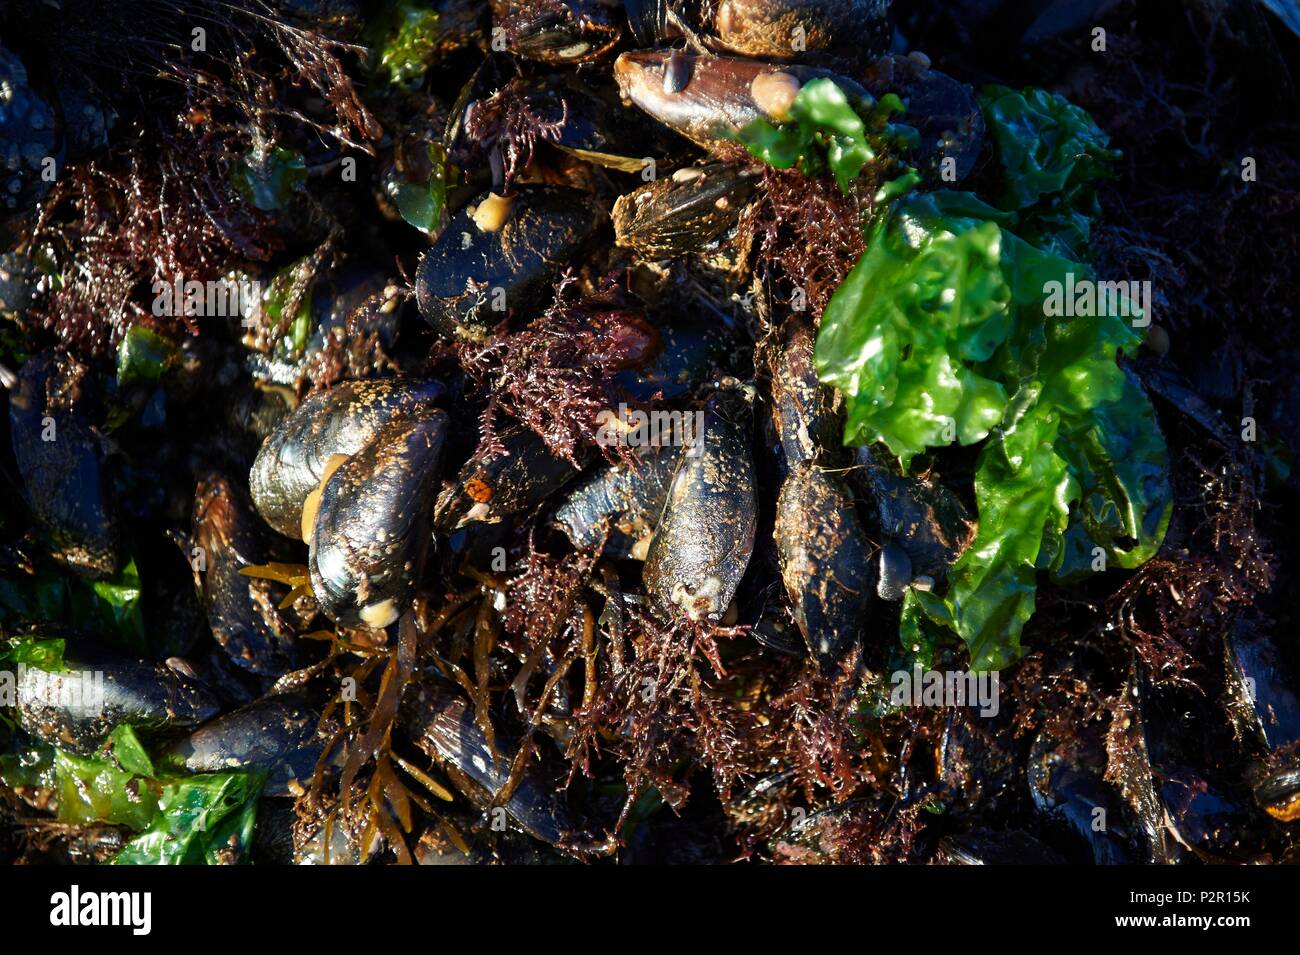 France, Herault, Marseillan, shellfish farming, Tarbouriech company, mussels farming Stock Photo